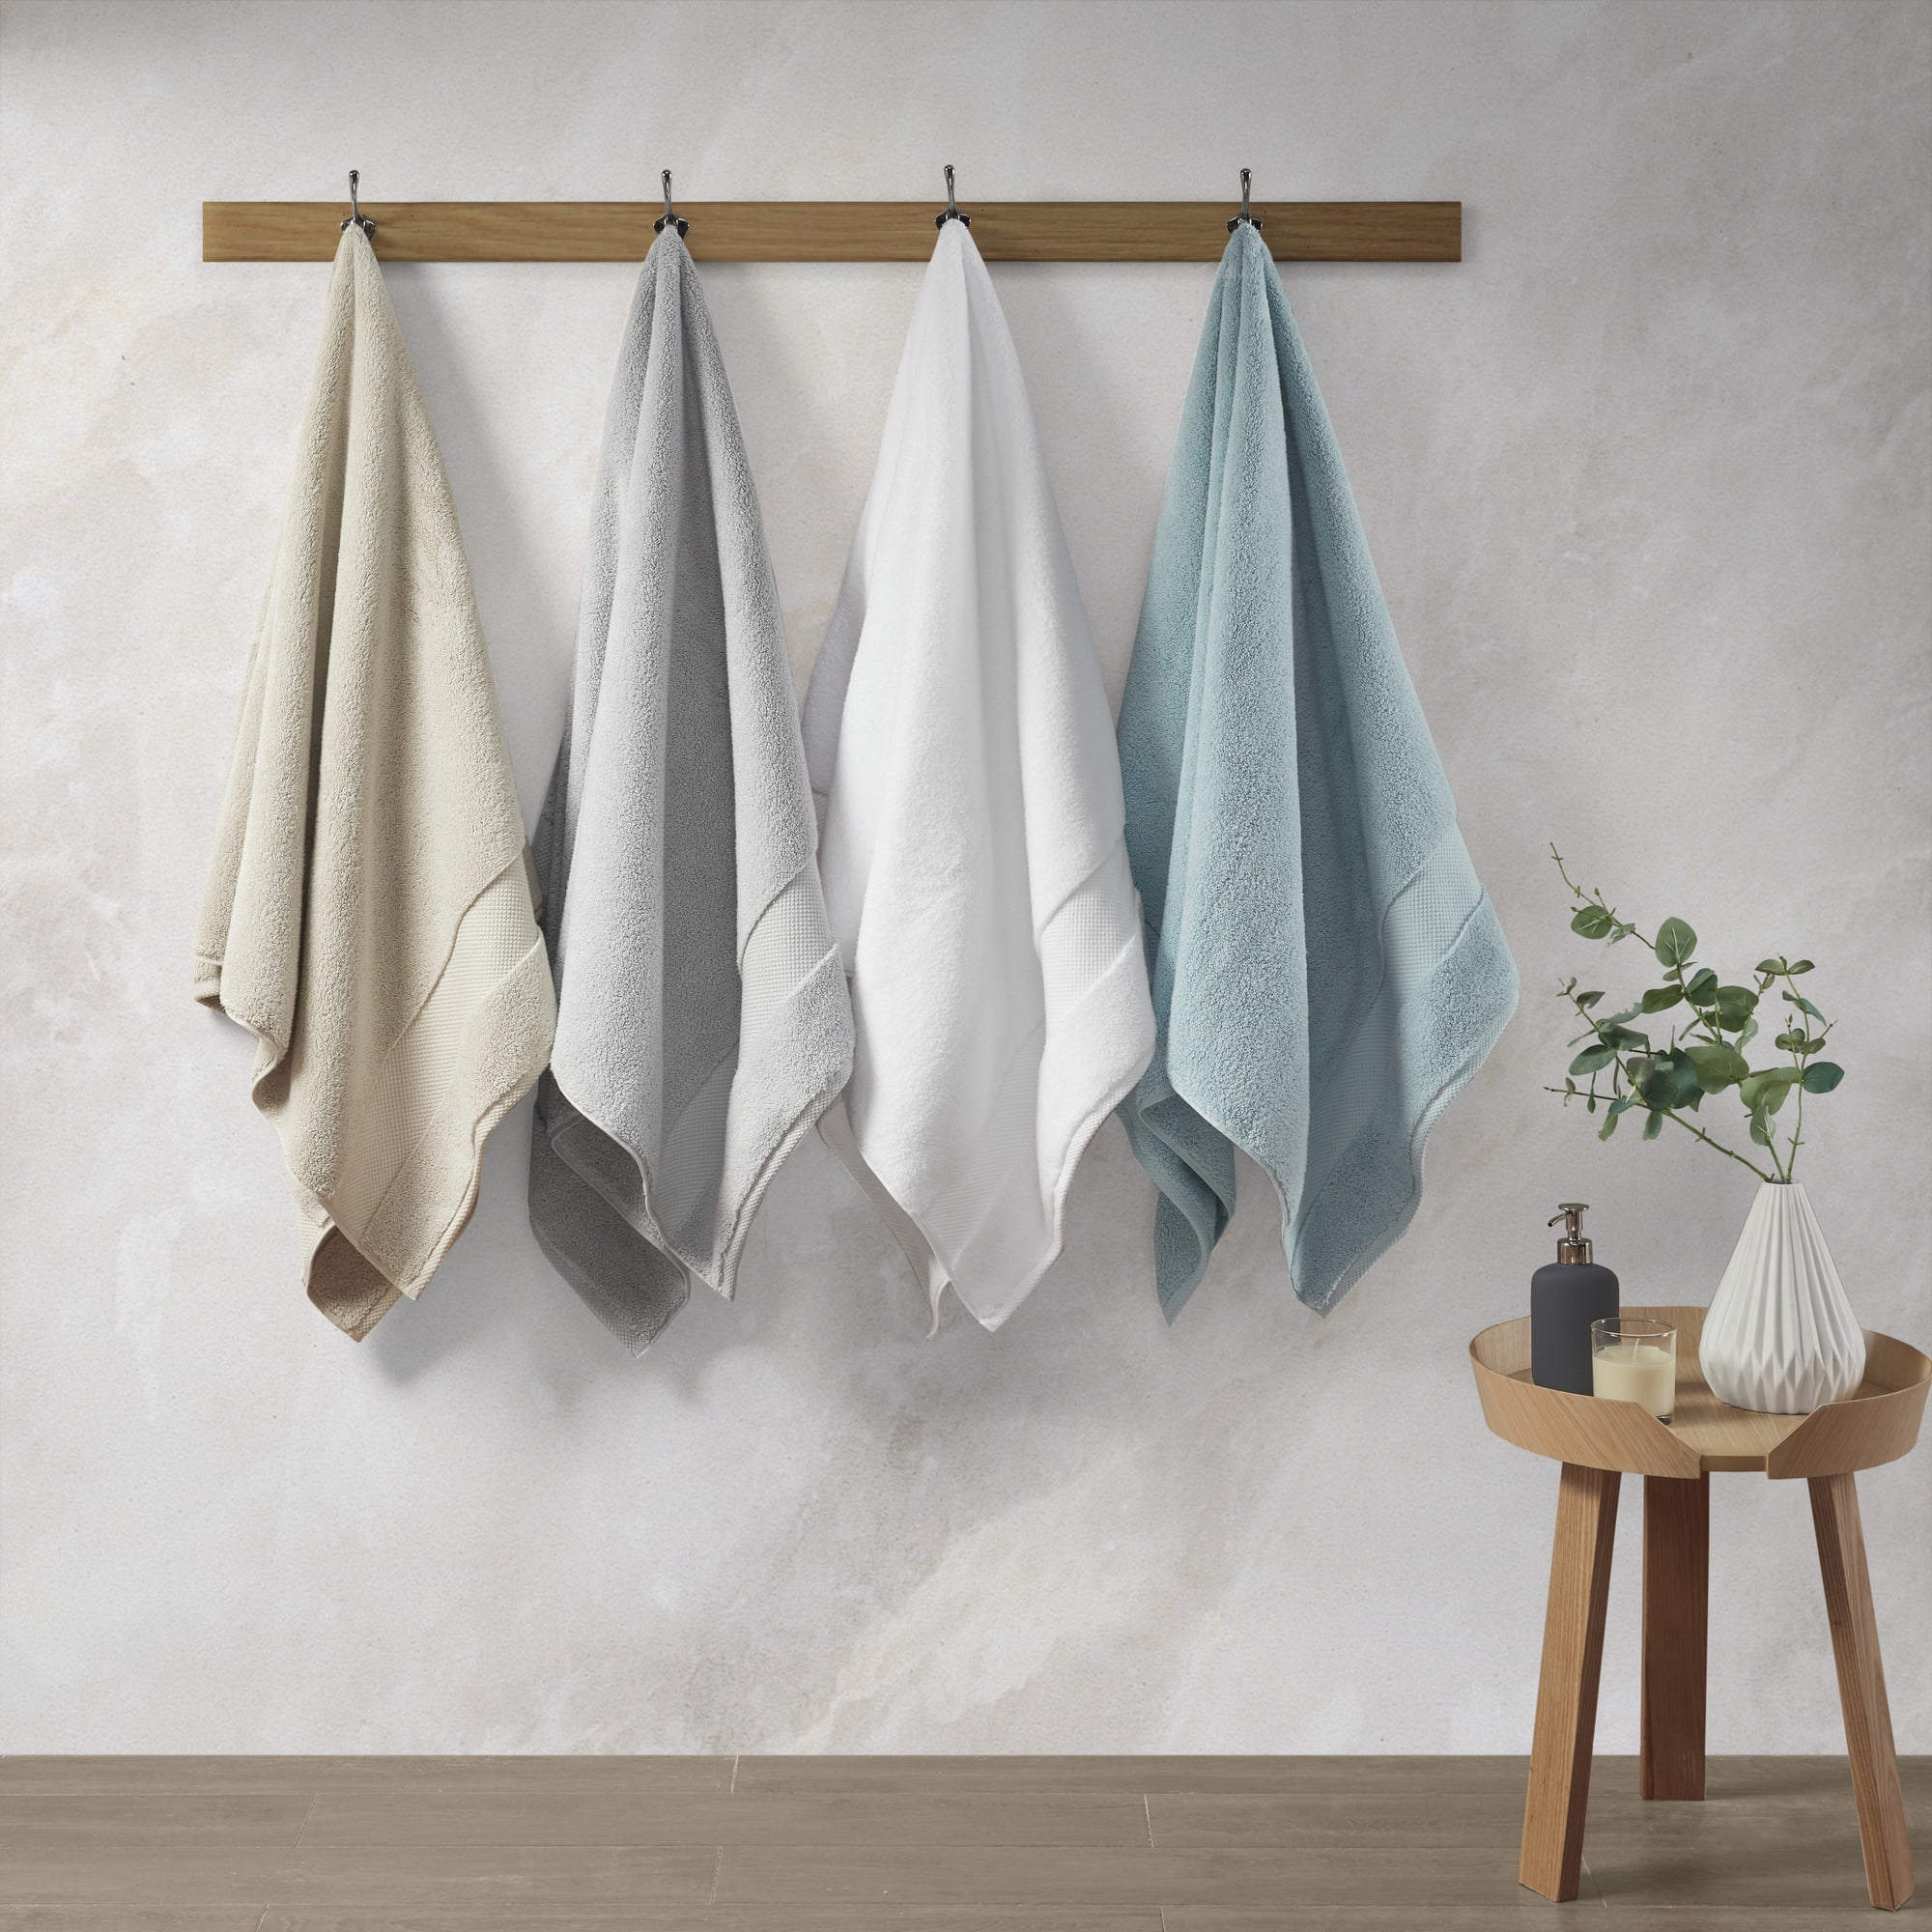 RUIBOLU Hand Towels for Bathroom Set 4 Piece, 100% Cotton Bath